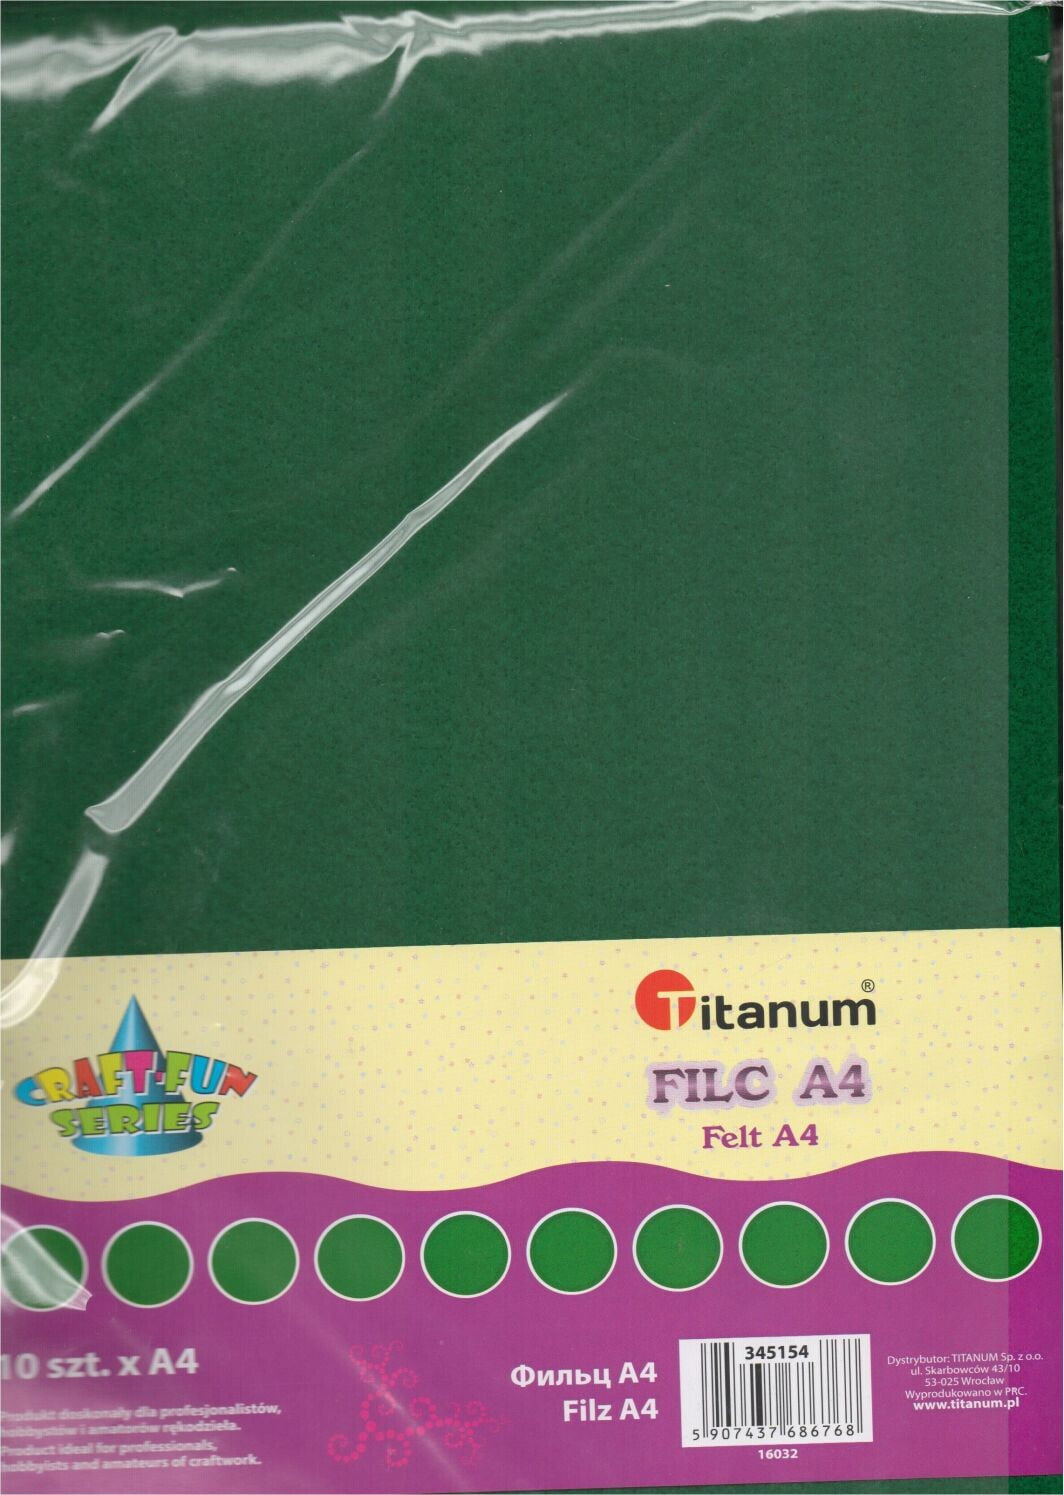 Titanum Filc A4 Ciemnozielony. 10 sztuk. 345154